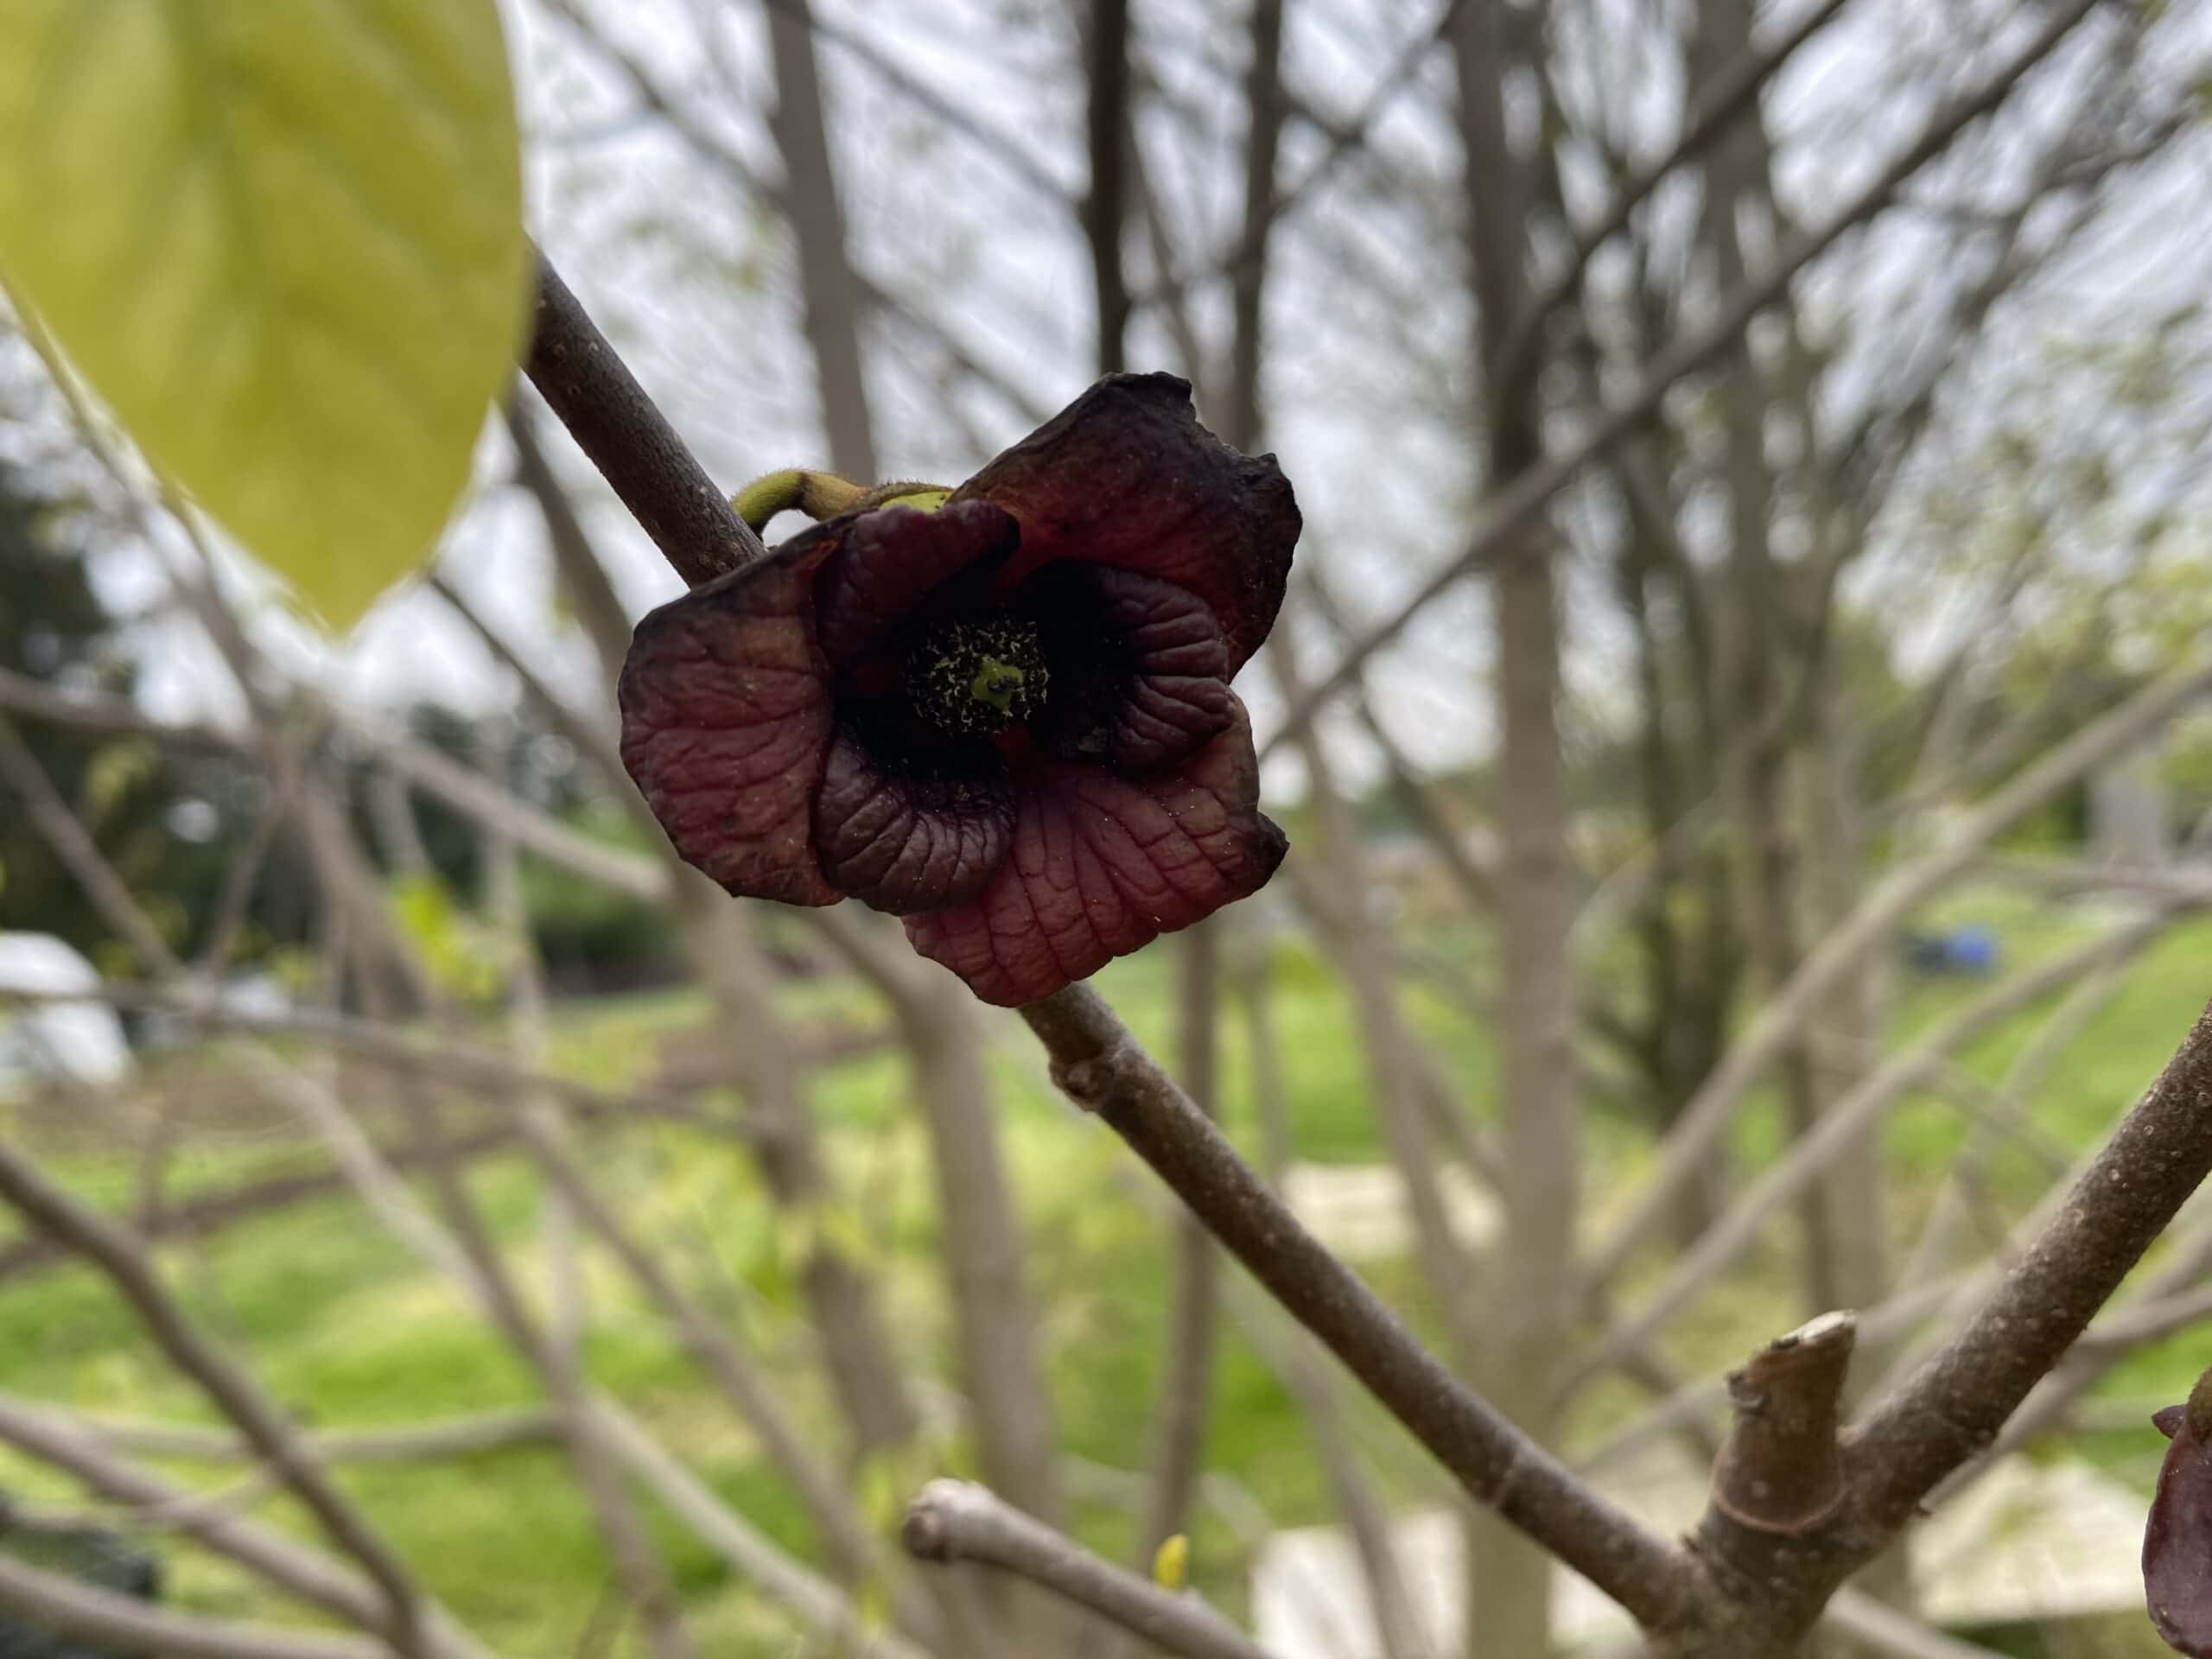 Pawpaw flower. Very dark maroon with 3 petals curling back.